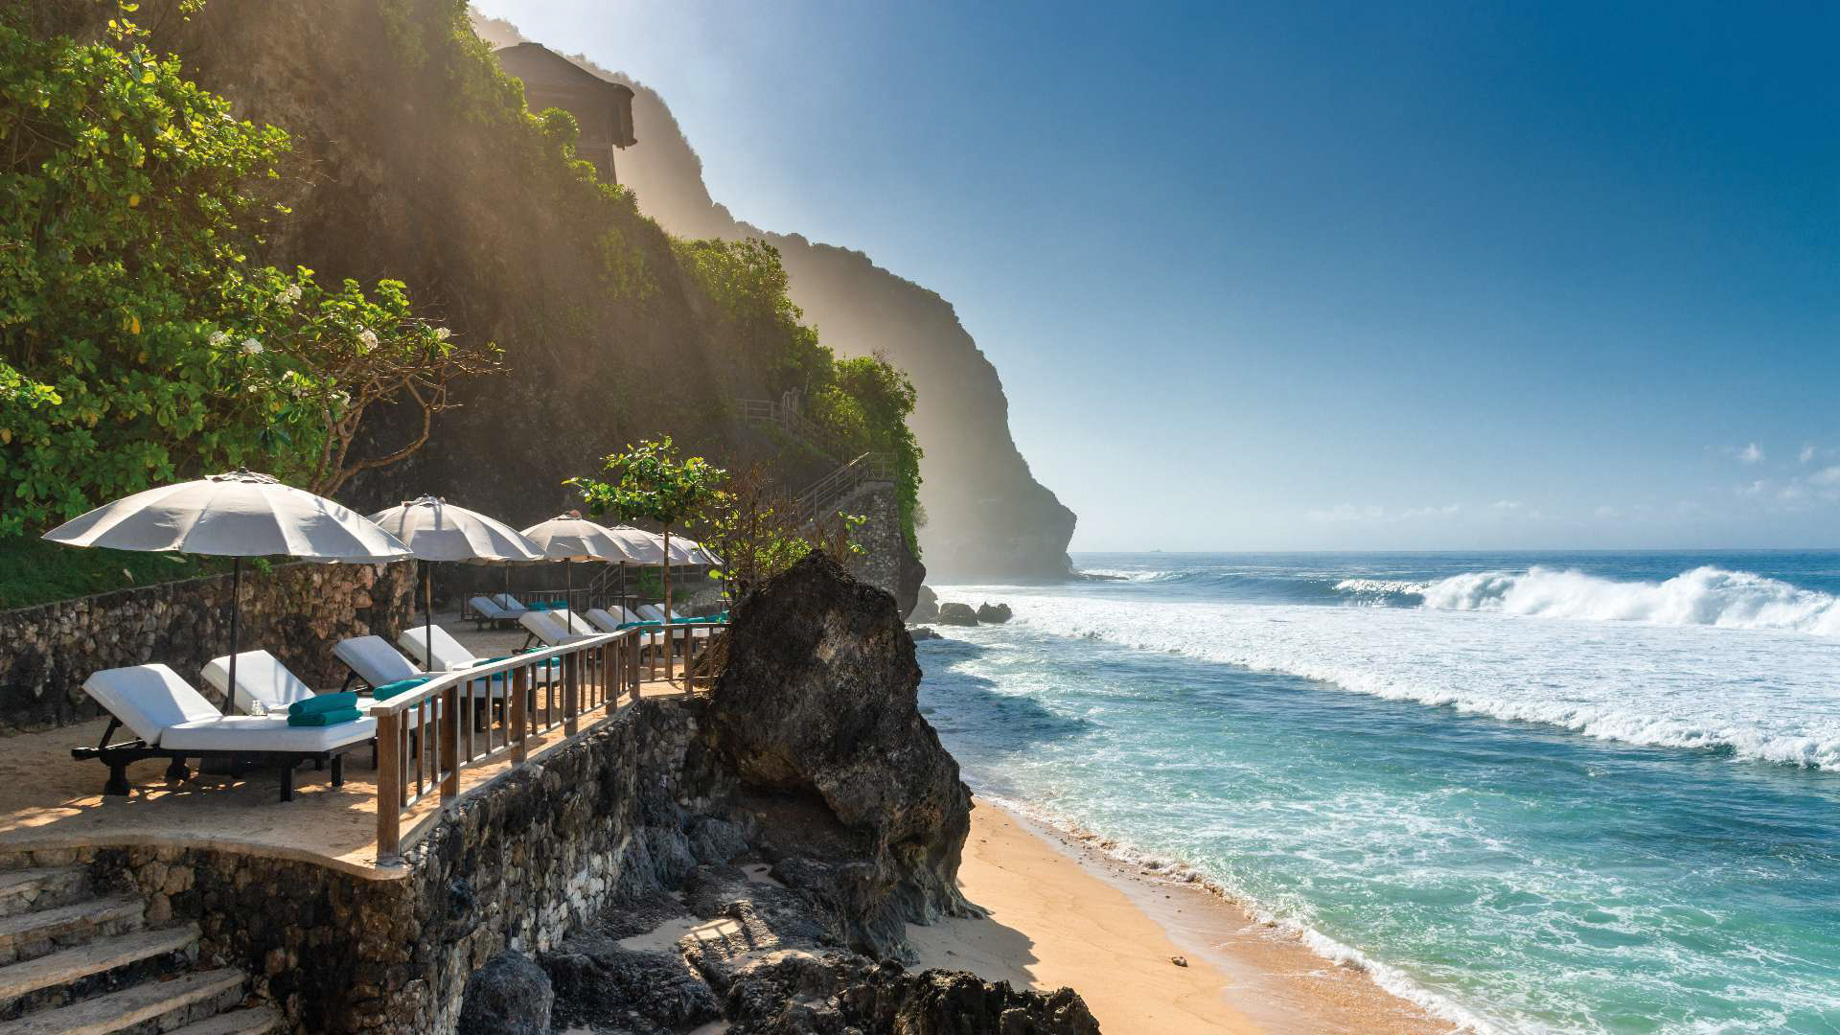 Bvlgari Resort Bali – Uluwatu, Bali, Indonesia – Resort Private Beach Deck